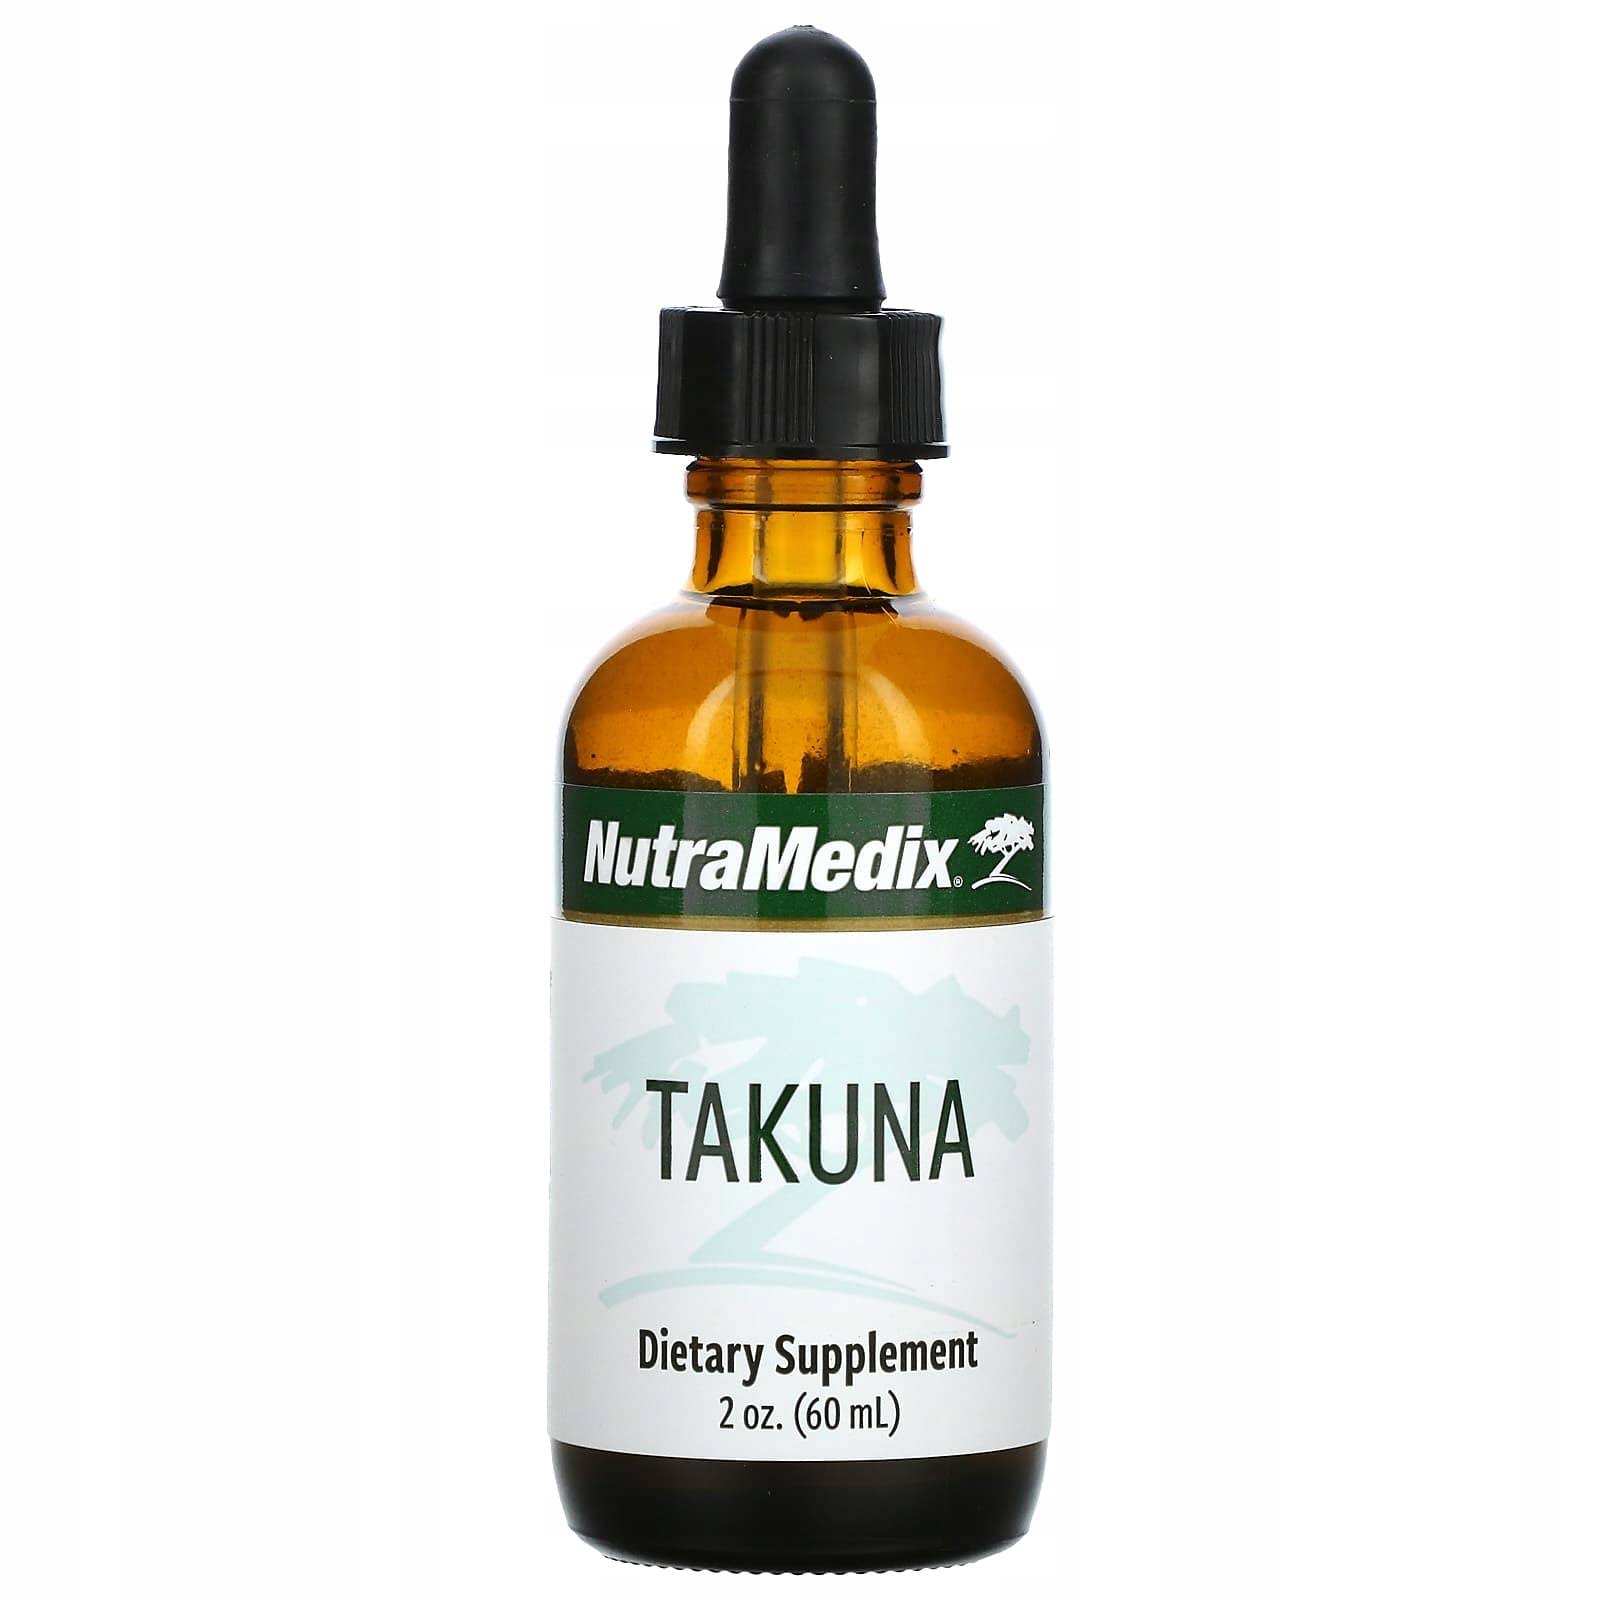 NutraMedix Takuna - 2 oz (60 ml)